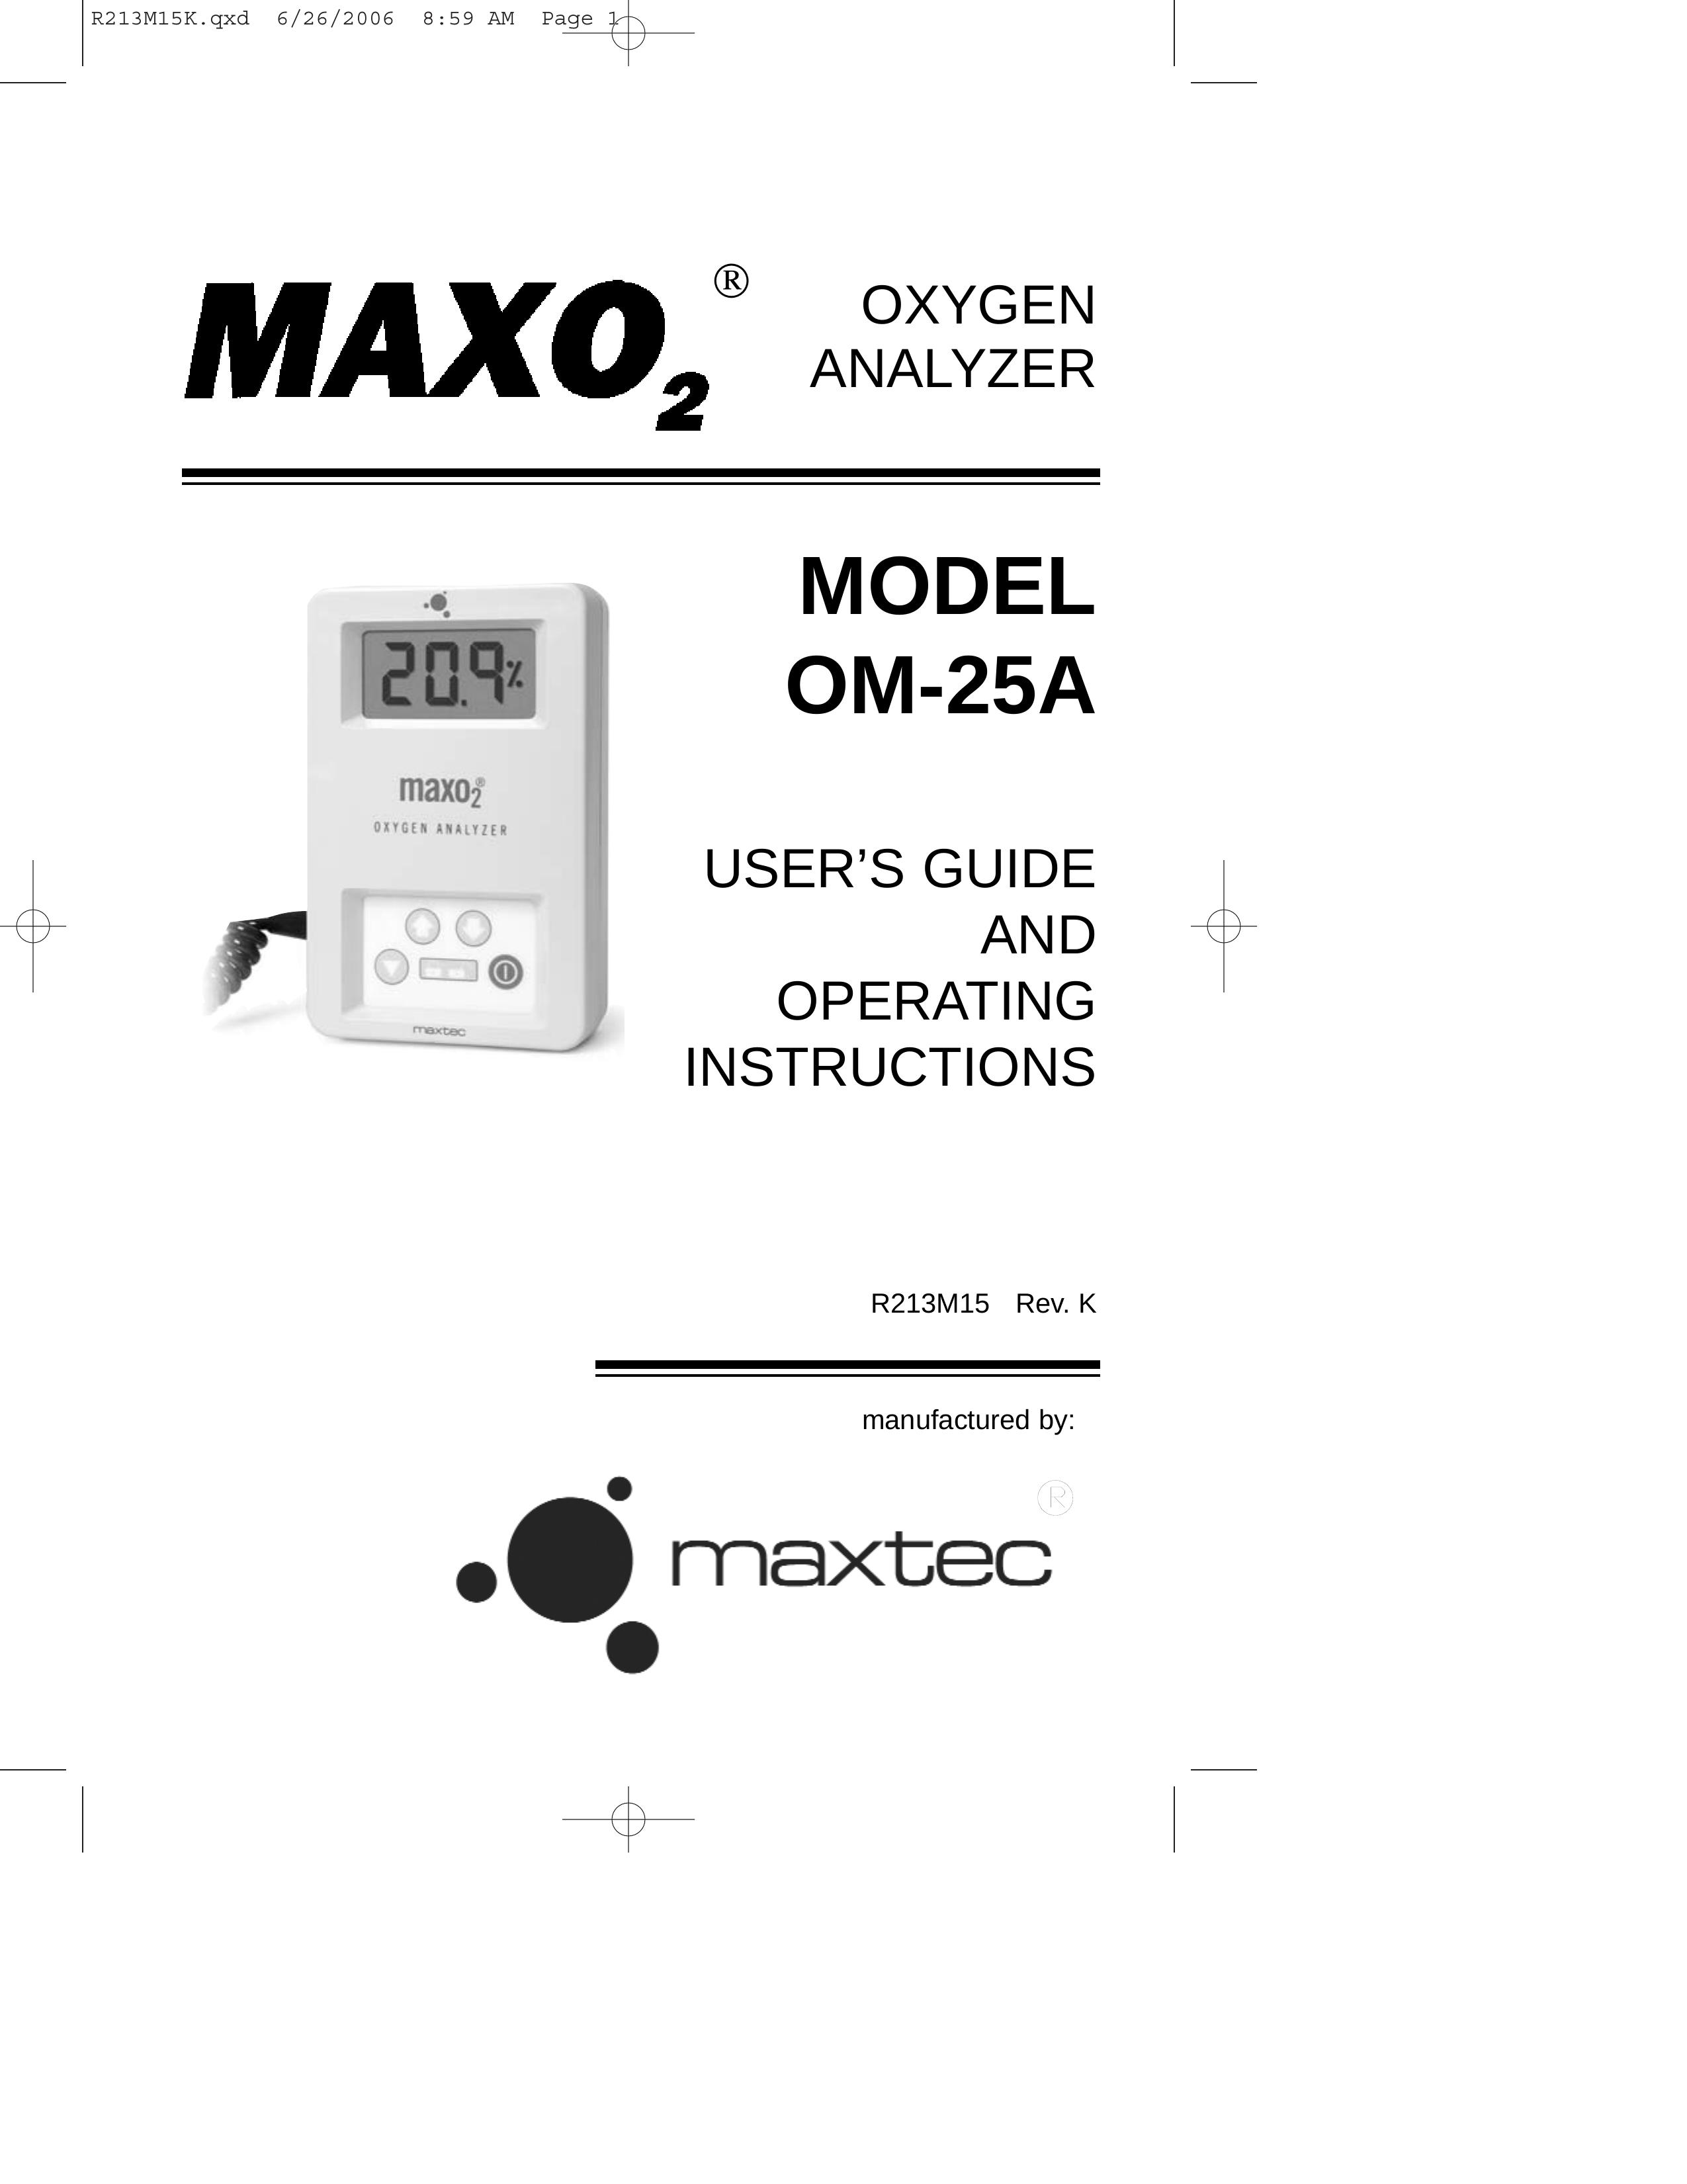 Hoya OM-25A Oxygen Equipment User Manual